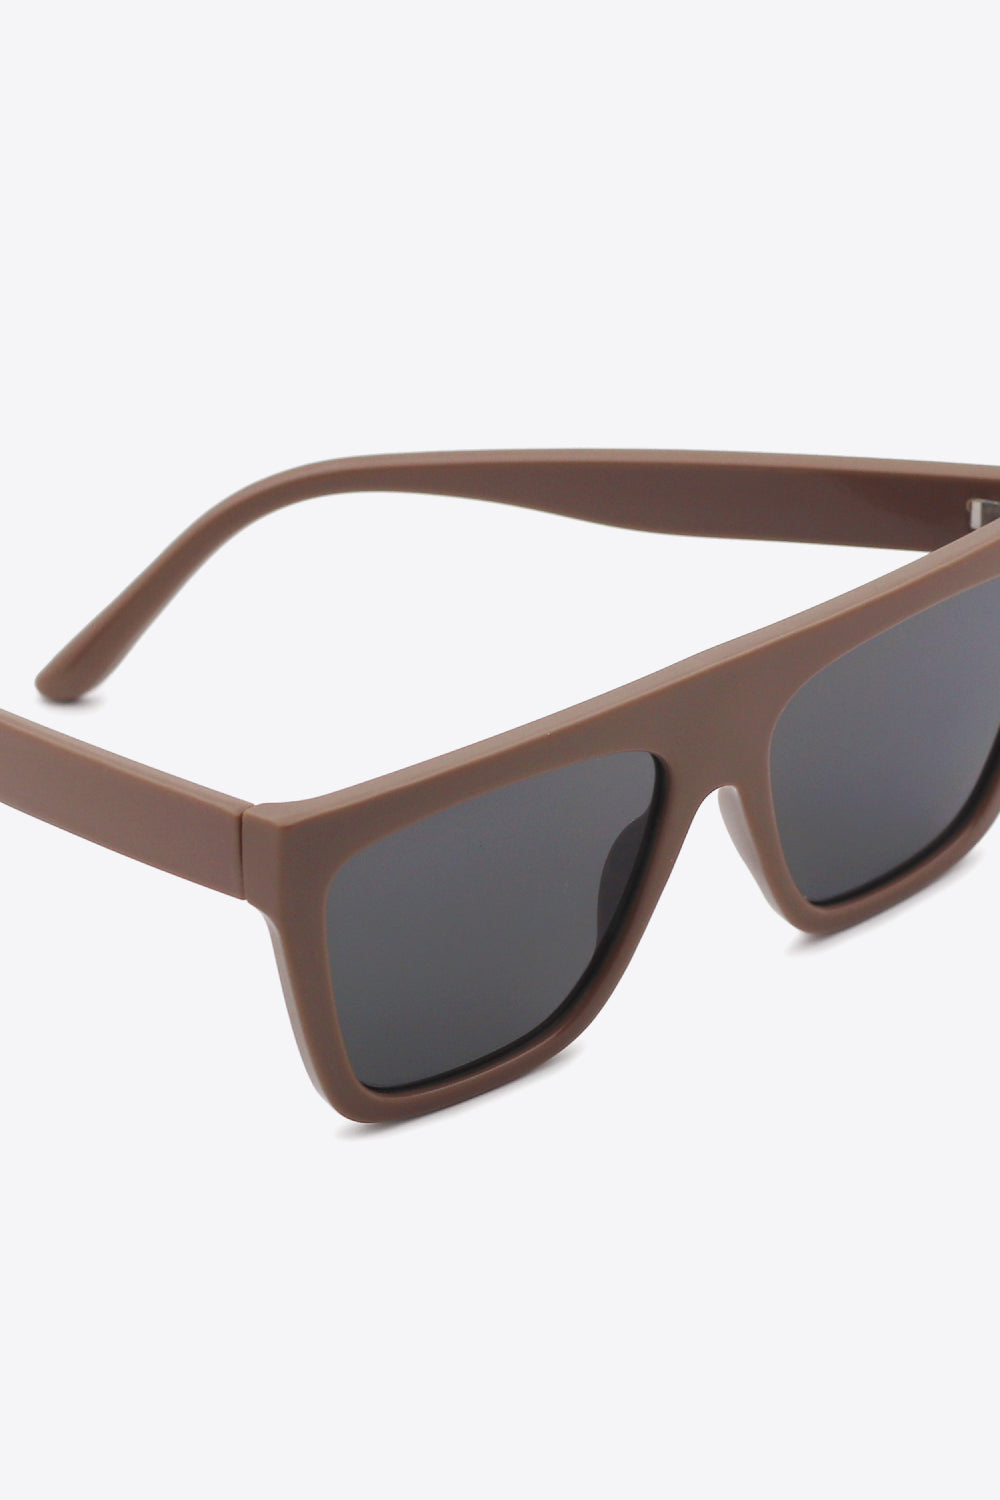 Dim Gray UV400 Polycarbonate Wayfarer Sunglasses Sentient Beauty Fashions Apparel & Accessories